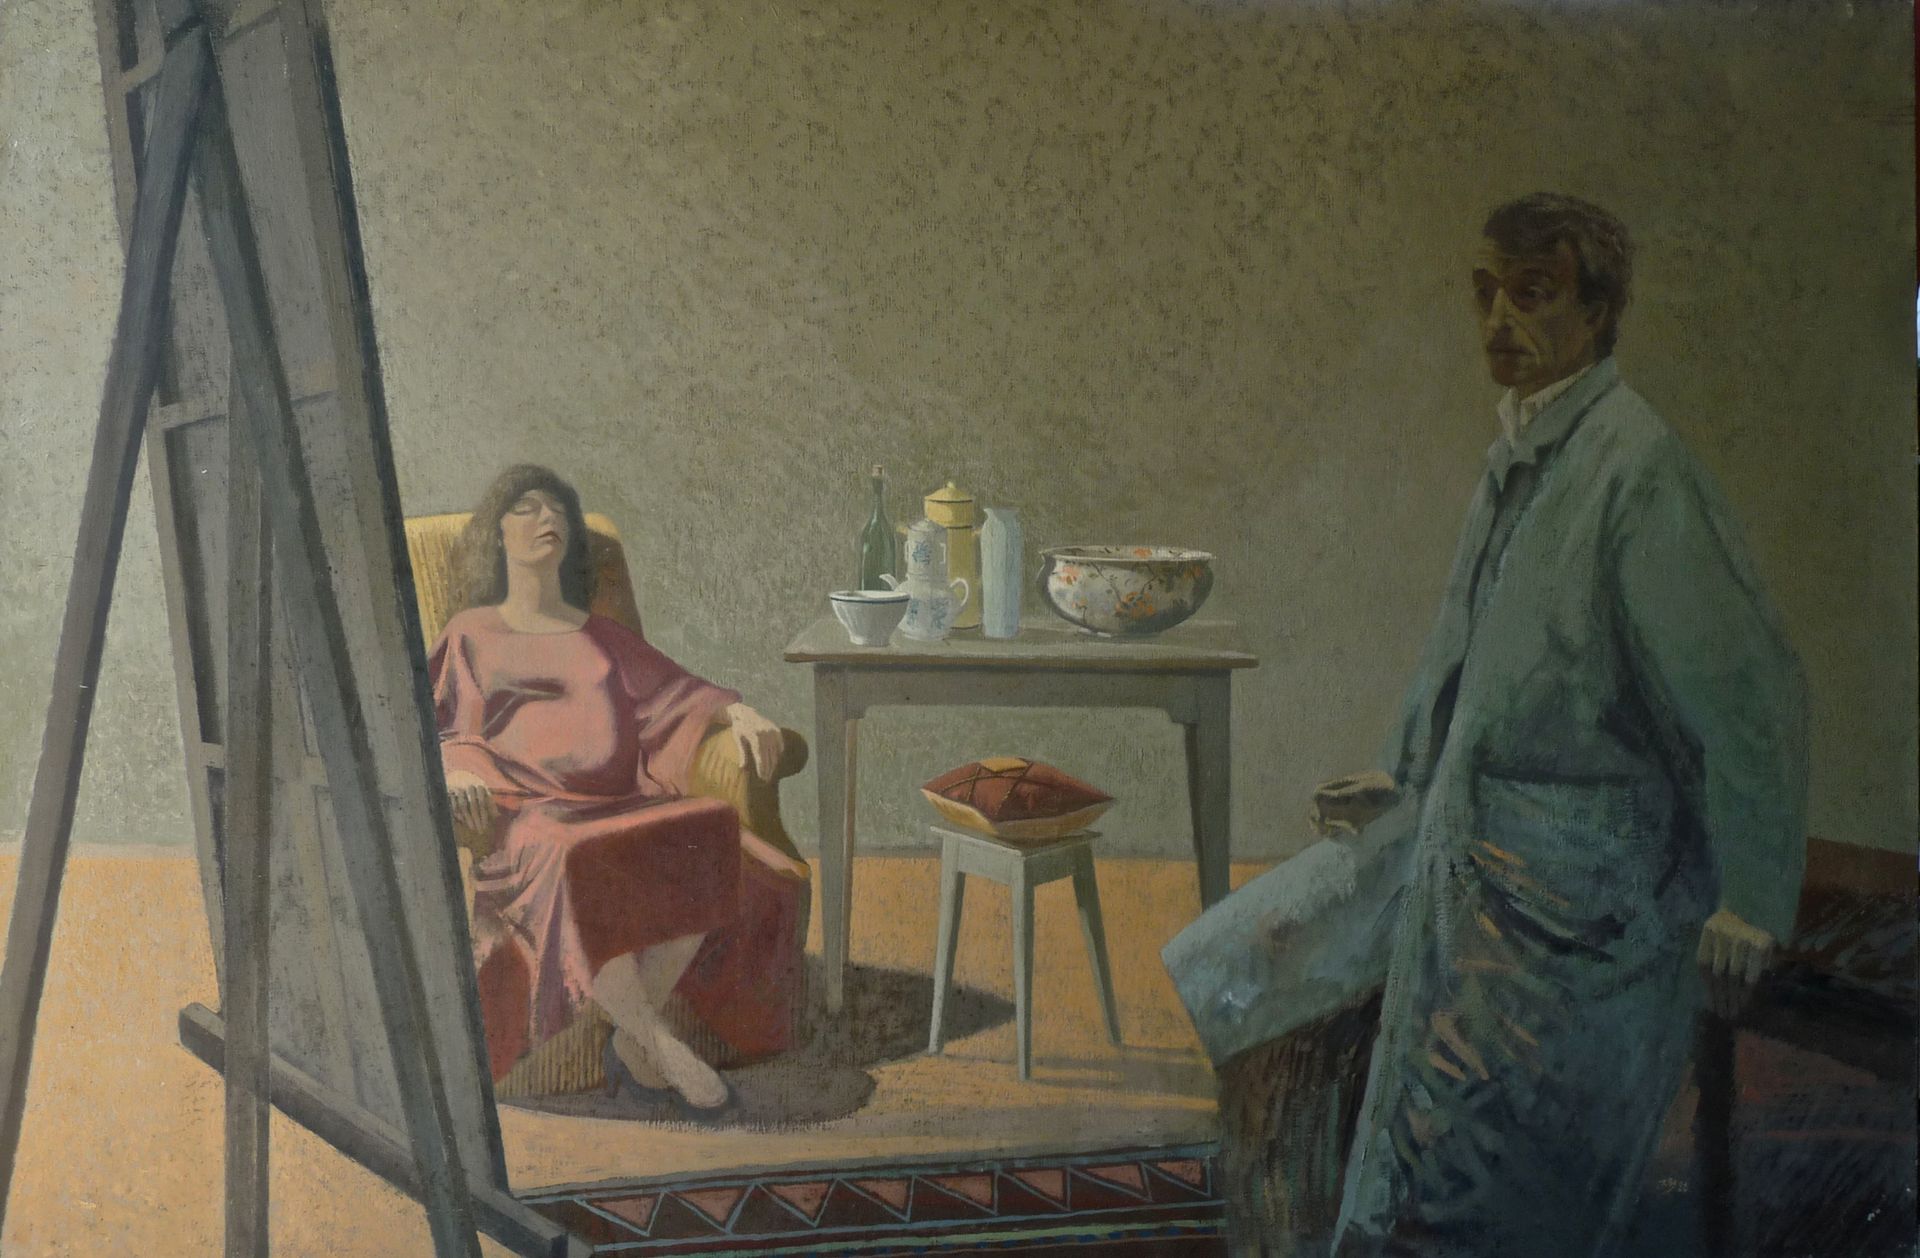 Null 让-克劳德-贝松-吉拉尔 (1938-2021)

1988年6月，在工作室里

布面油画，右下方有图案和日期

97 x 146 cm